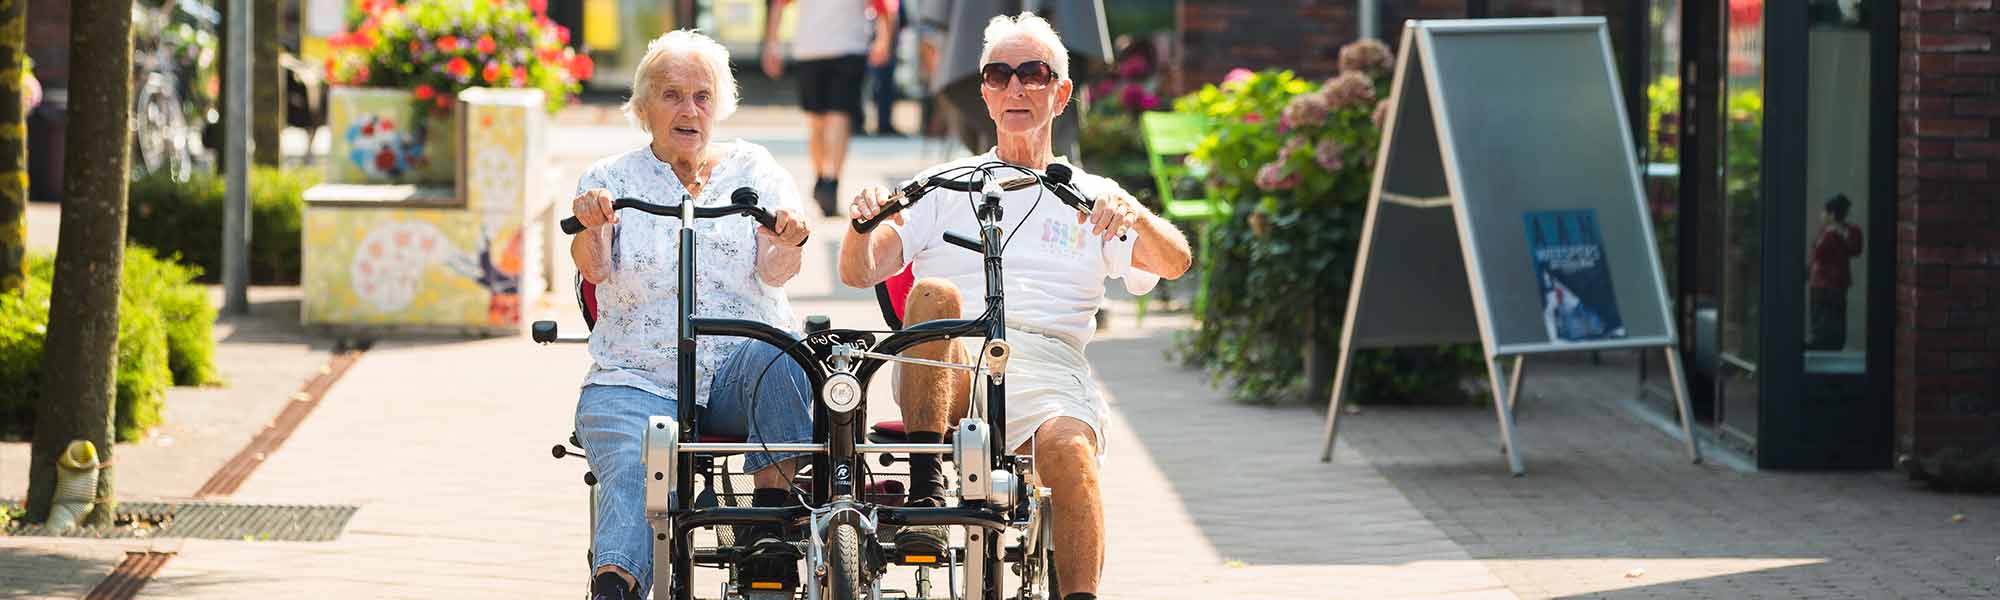 Going Dutch dementia care villages cycle sunshine banner hero